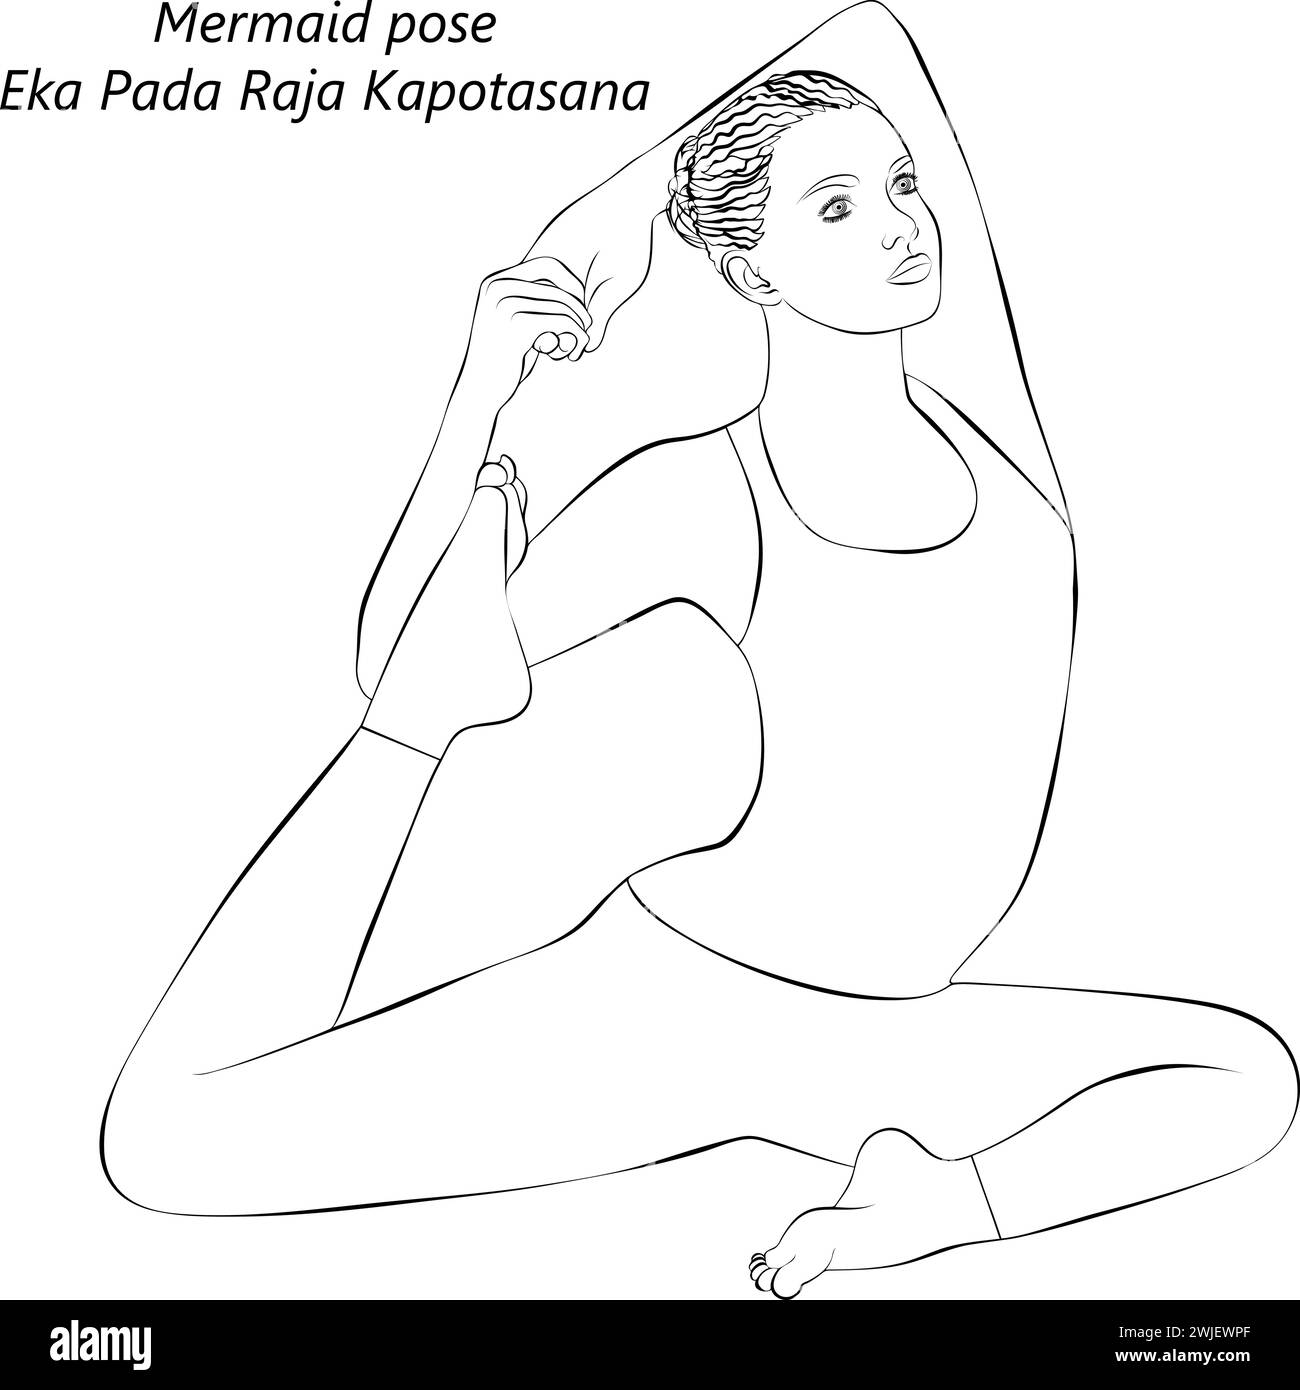 Sketch of woman doing yoga Eka Pada Raja Kapotasana. Mermaid pose. Intermediate Difficulty. Isolated vector illustration. Stock Vector